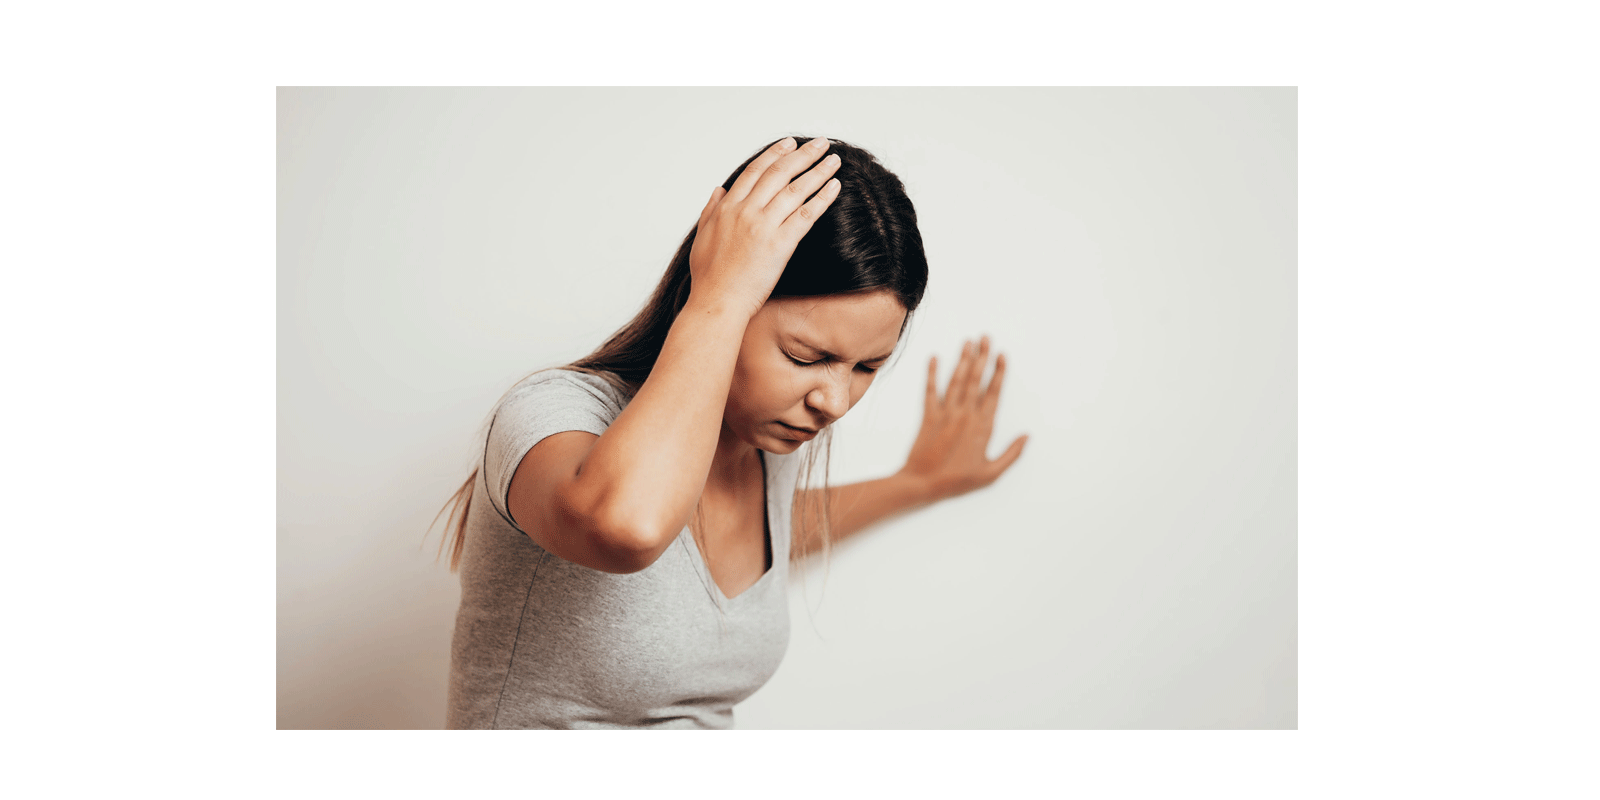 woman-hand-to-head-balance-wall-headache